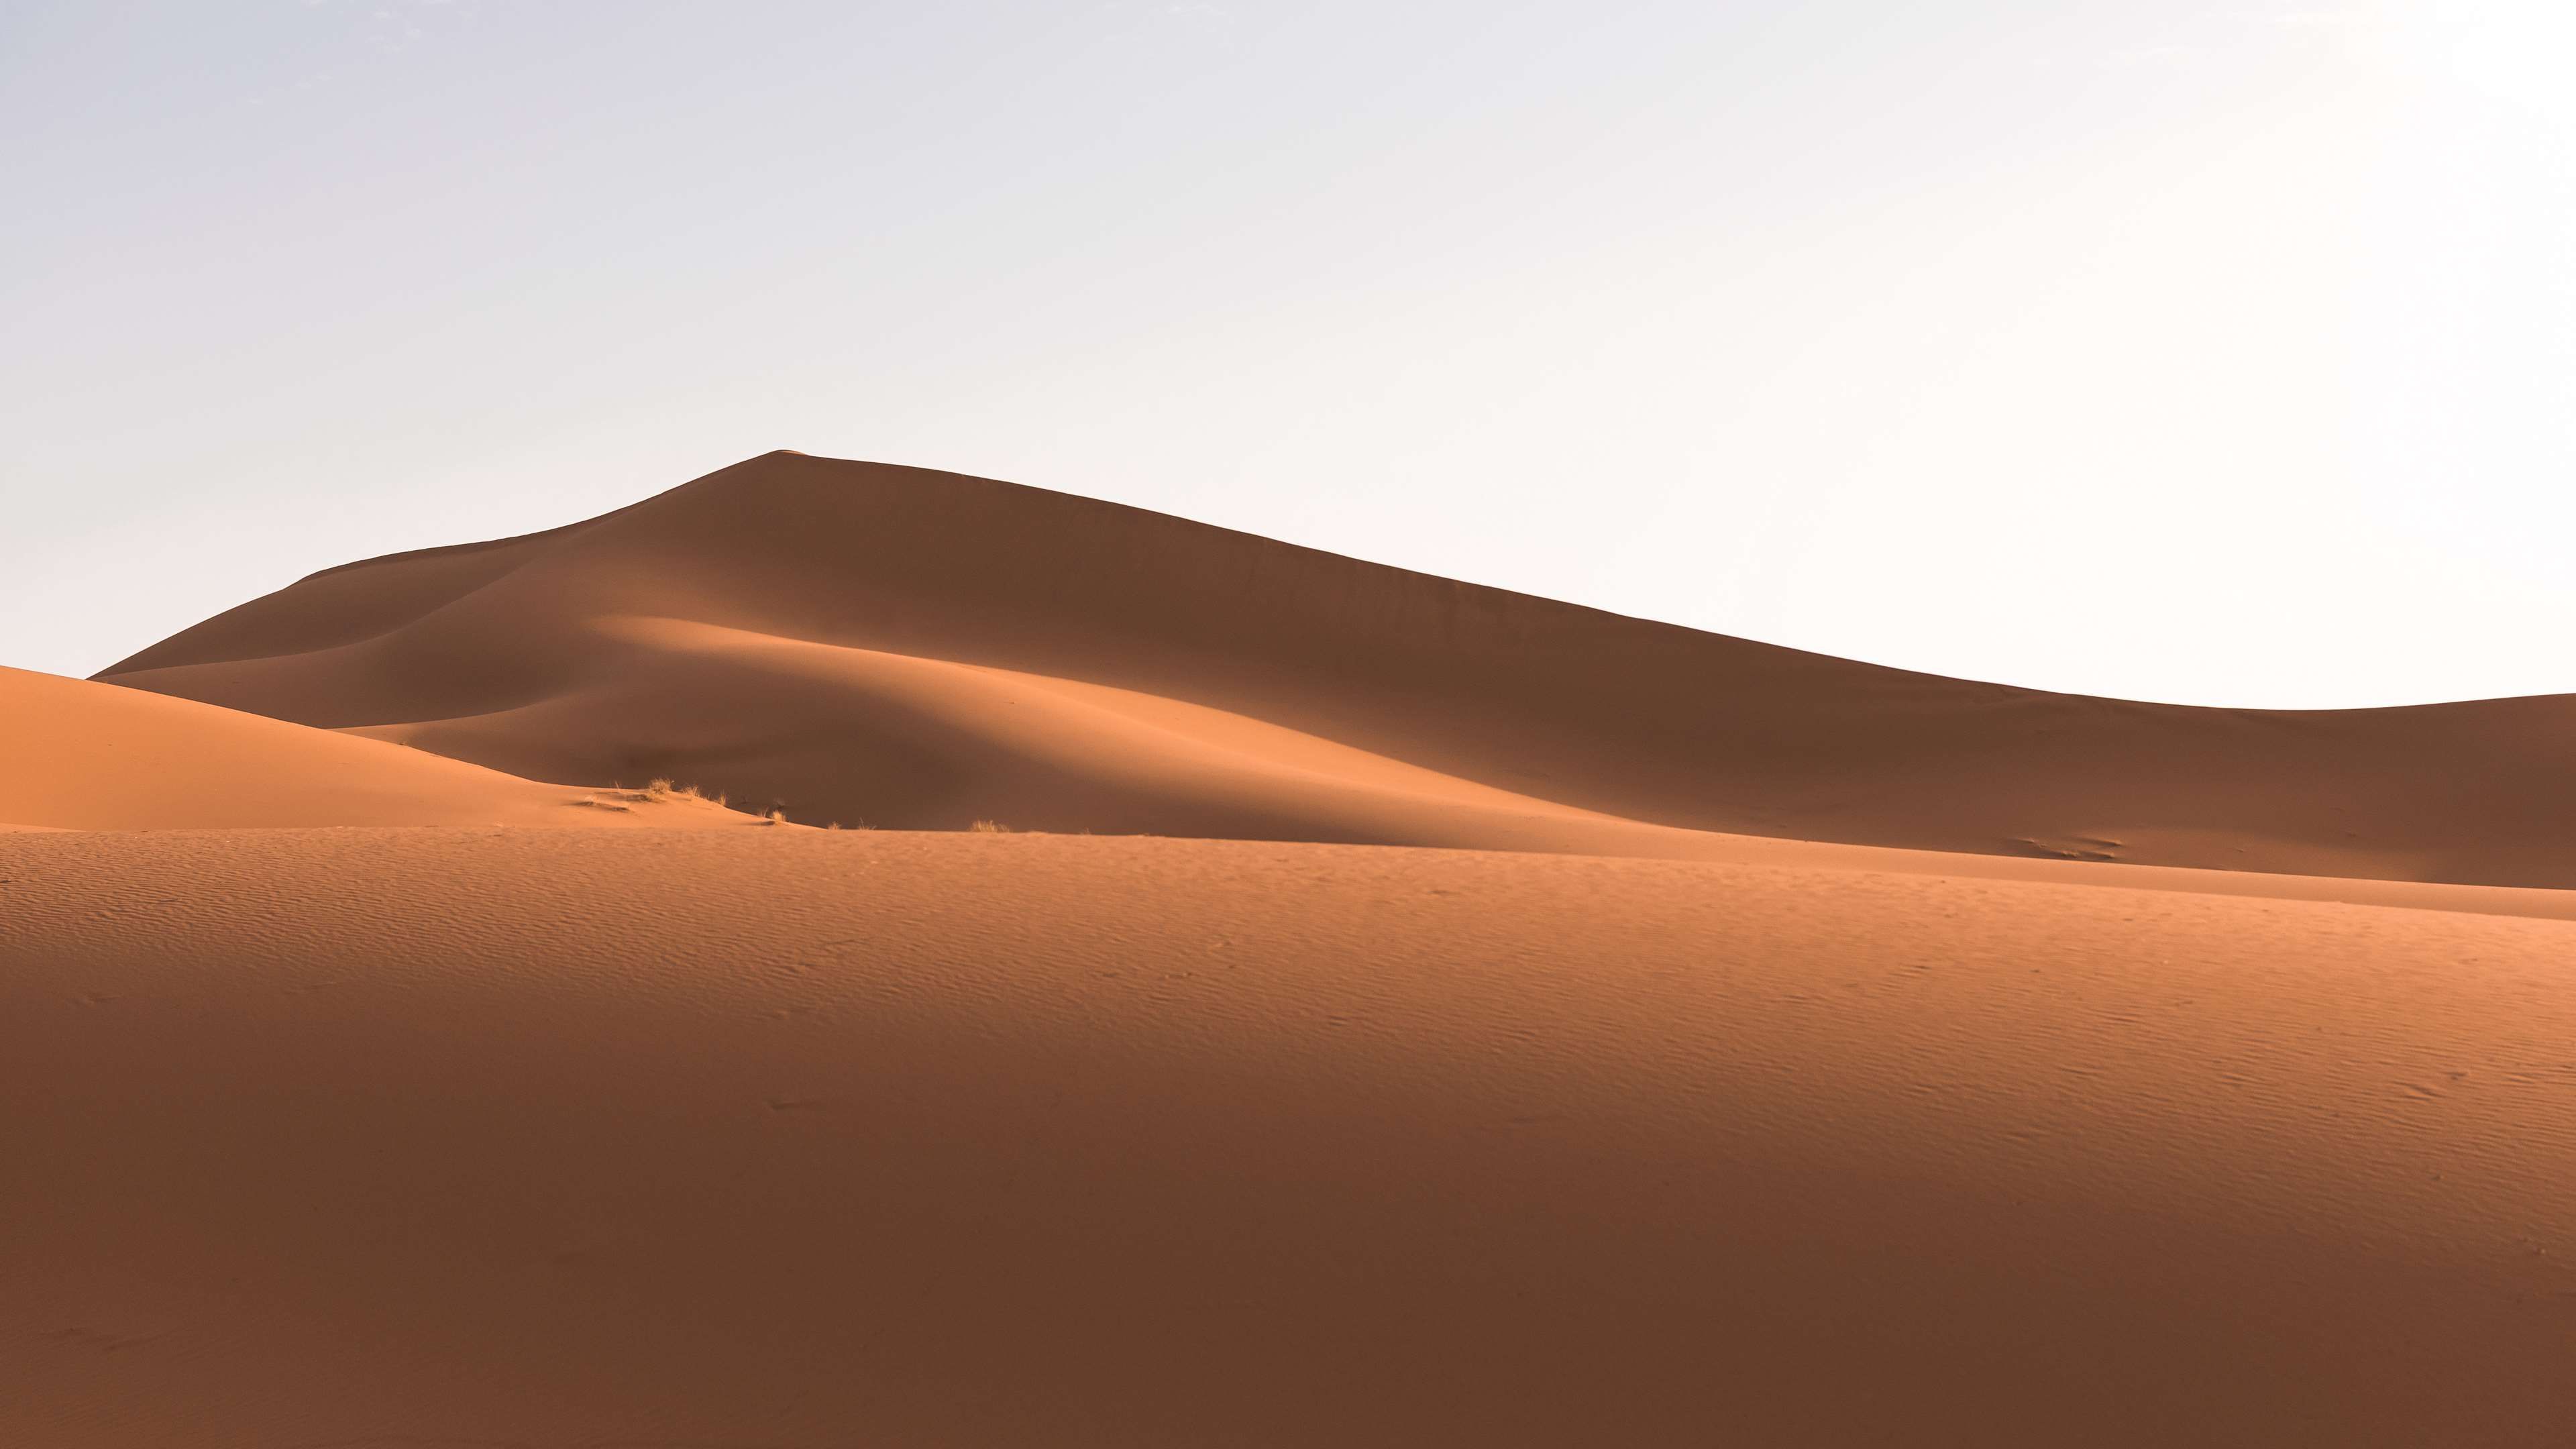 desert #dune #landscape #sand #sand dunes | wallpapers and ...